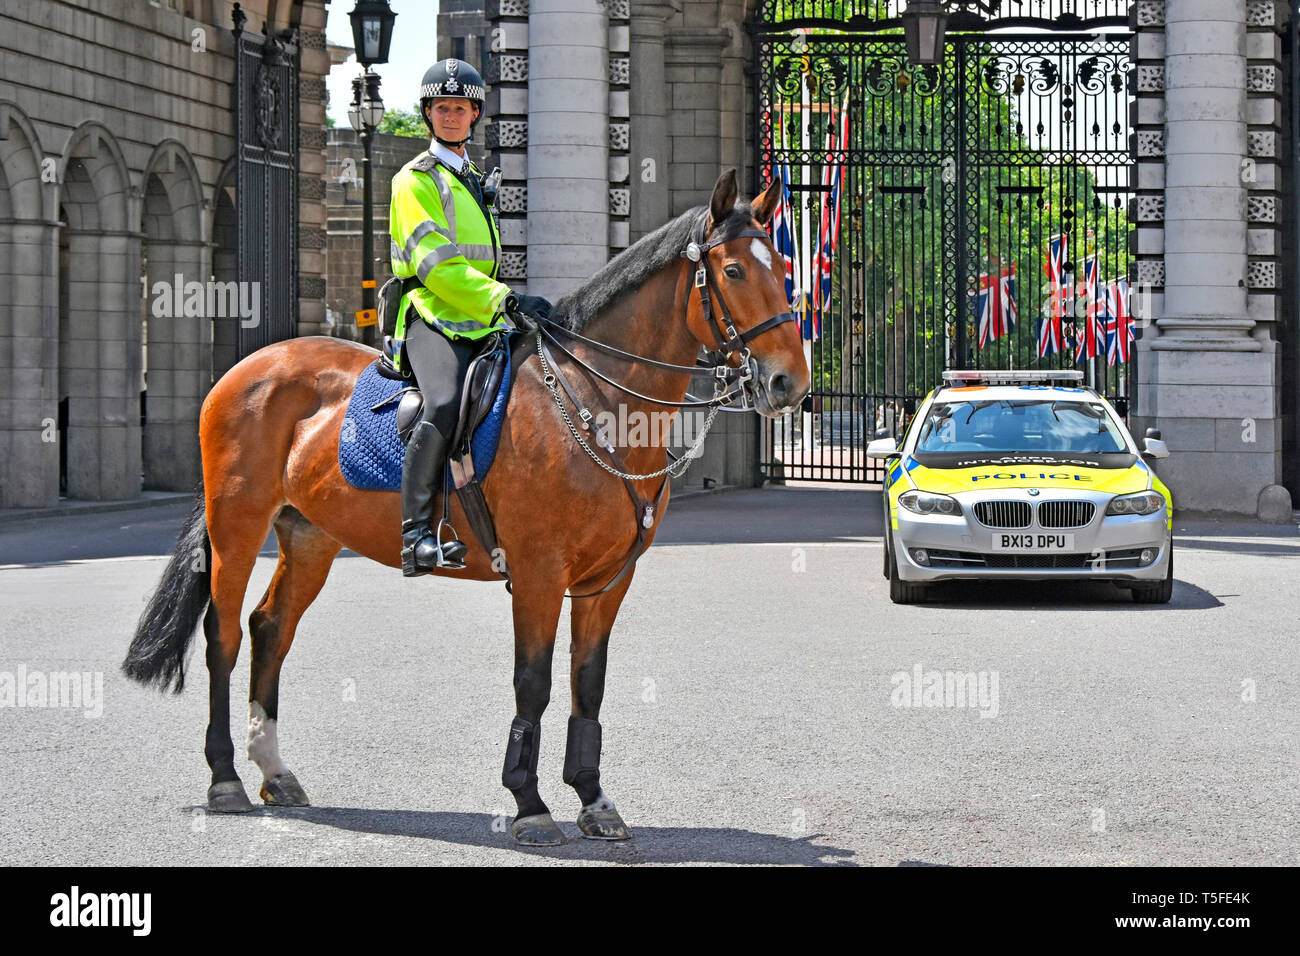 Police woman officer London WPC British metropolitan horseback high viz jacket & horse traffic control mounted duties Admiralty Arch London England UK Stock Photo